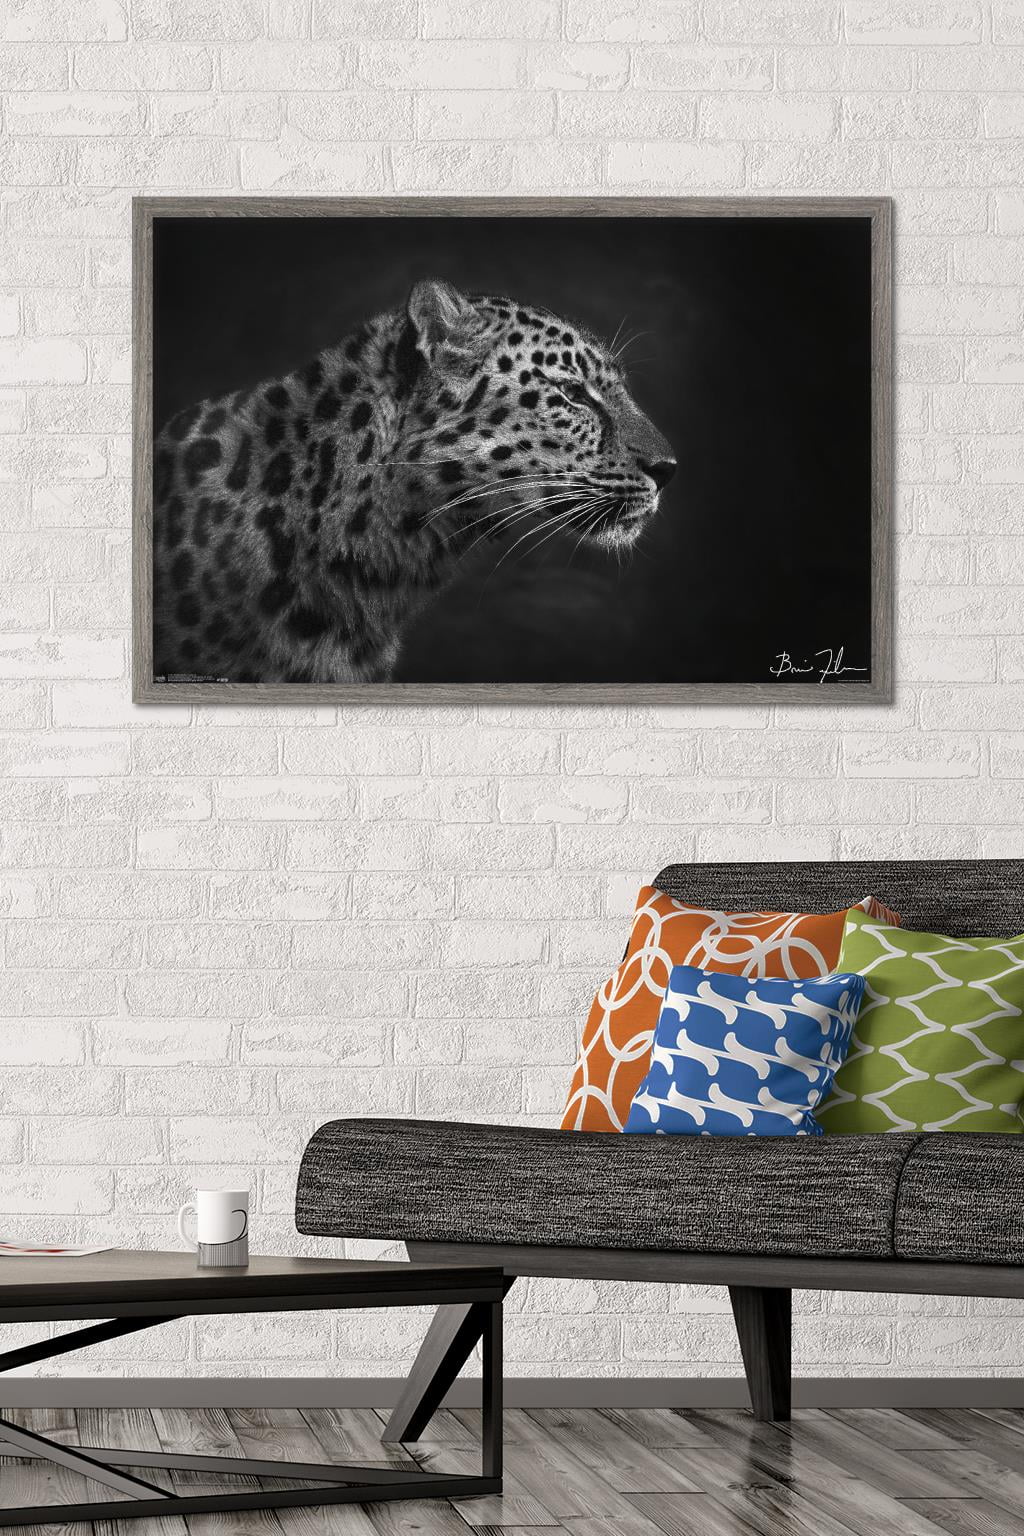 Leopard in Snow Wildlife Animal Wall Decor Barnwood Framed Art Print Picture 